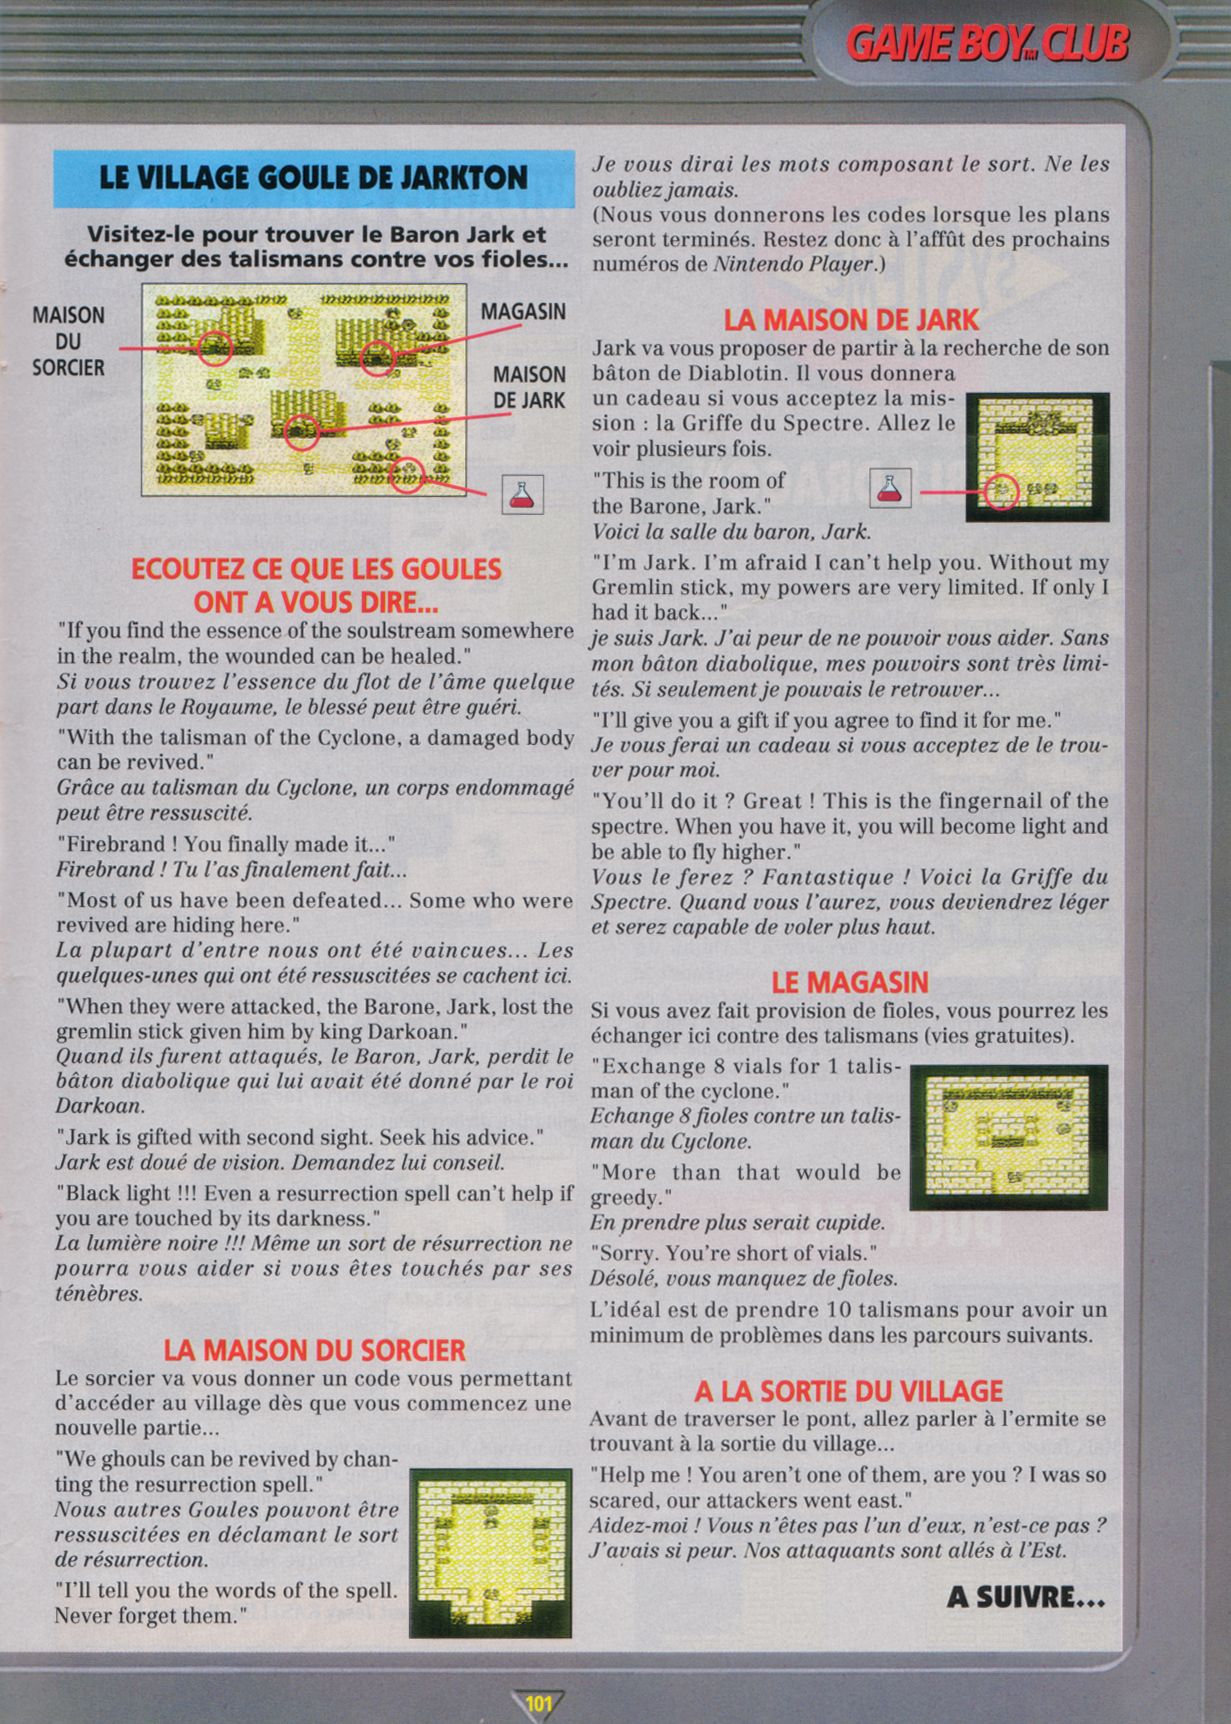 tests//1155/Nintendo Player 004 - Page 101 (1992-05-06).jpg